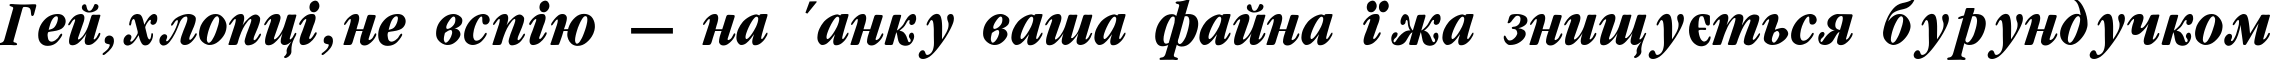 Пример написания шрифтом Garamondcond-Bold-Italic текста на украинском